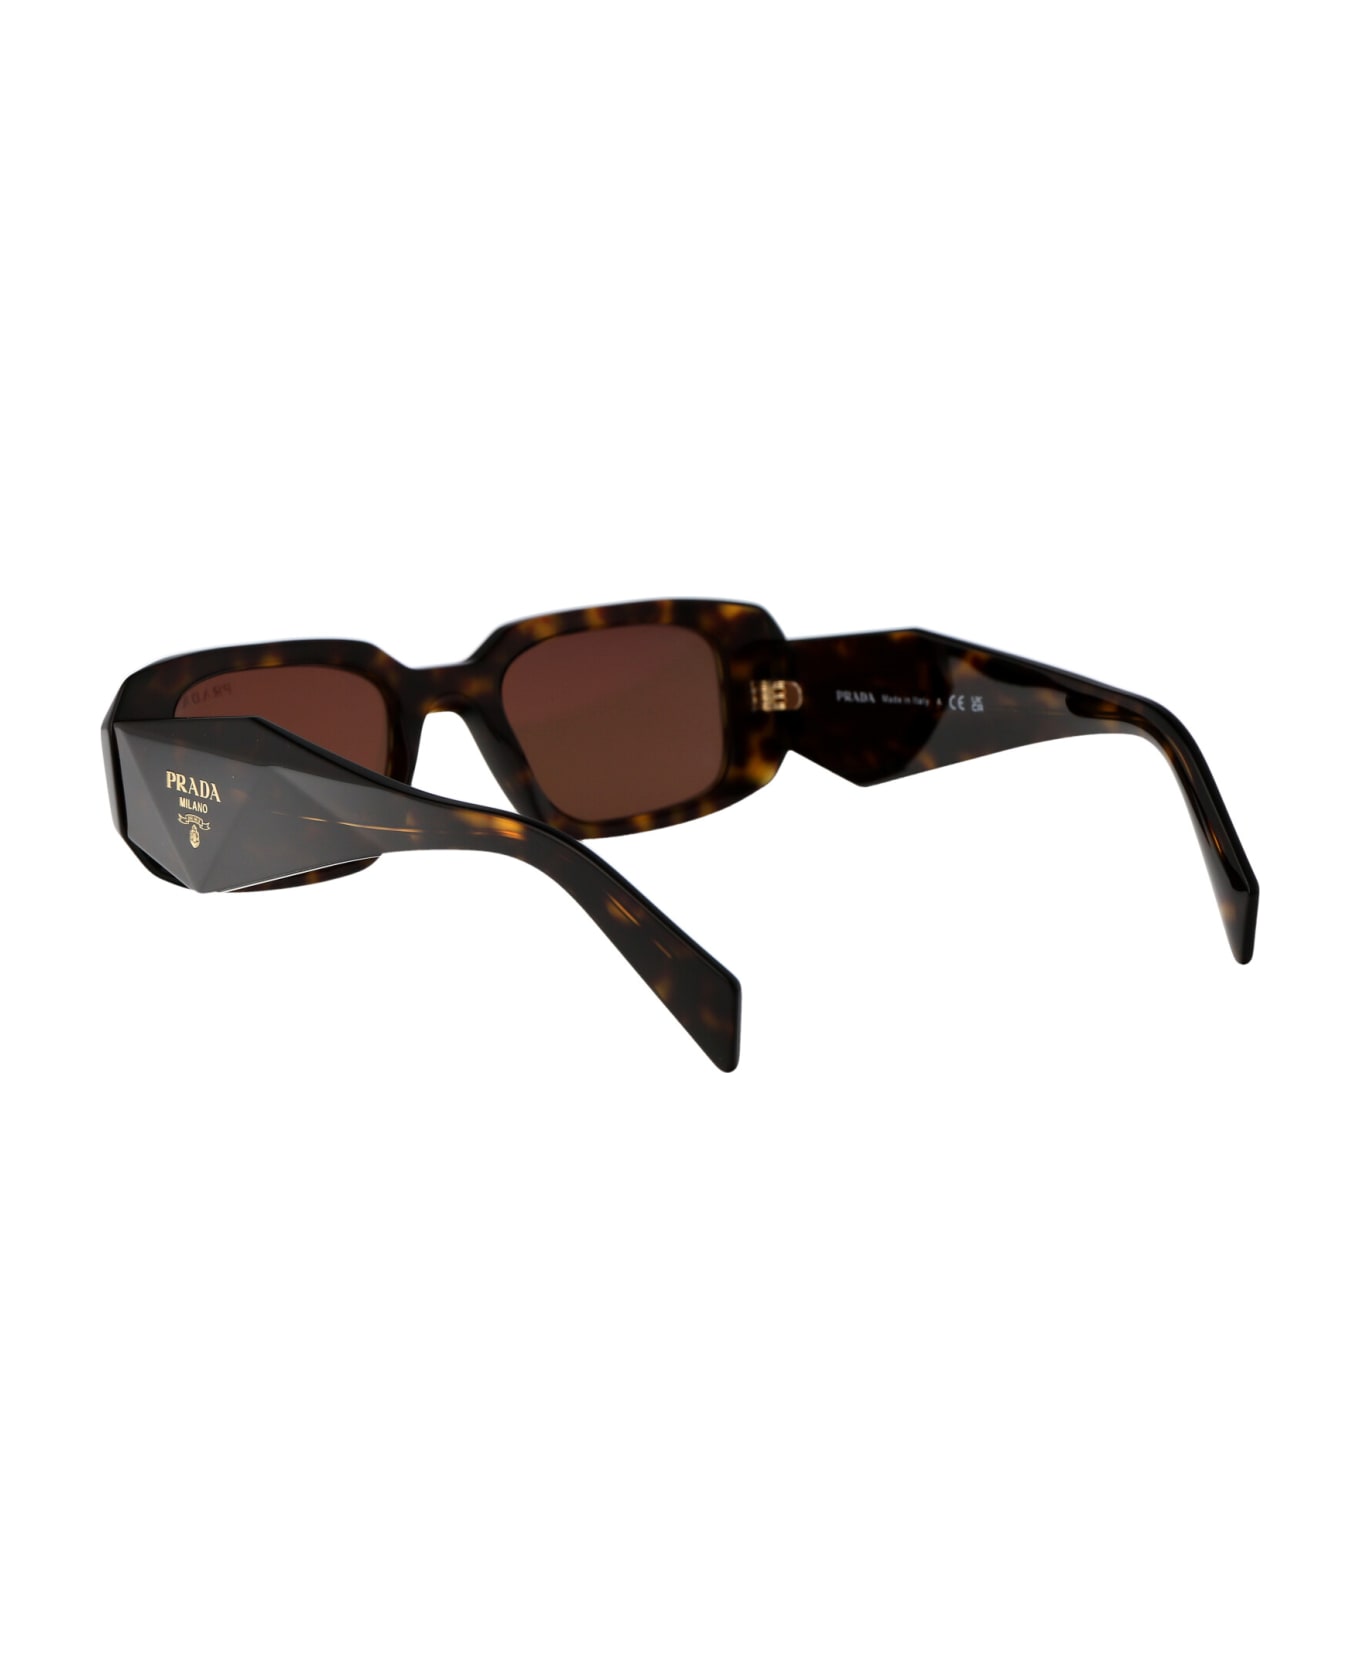 Prada Eyewear 0pr 17ws Sunglasses - 2AU03U Tortoise